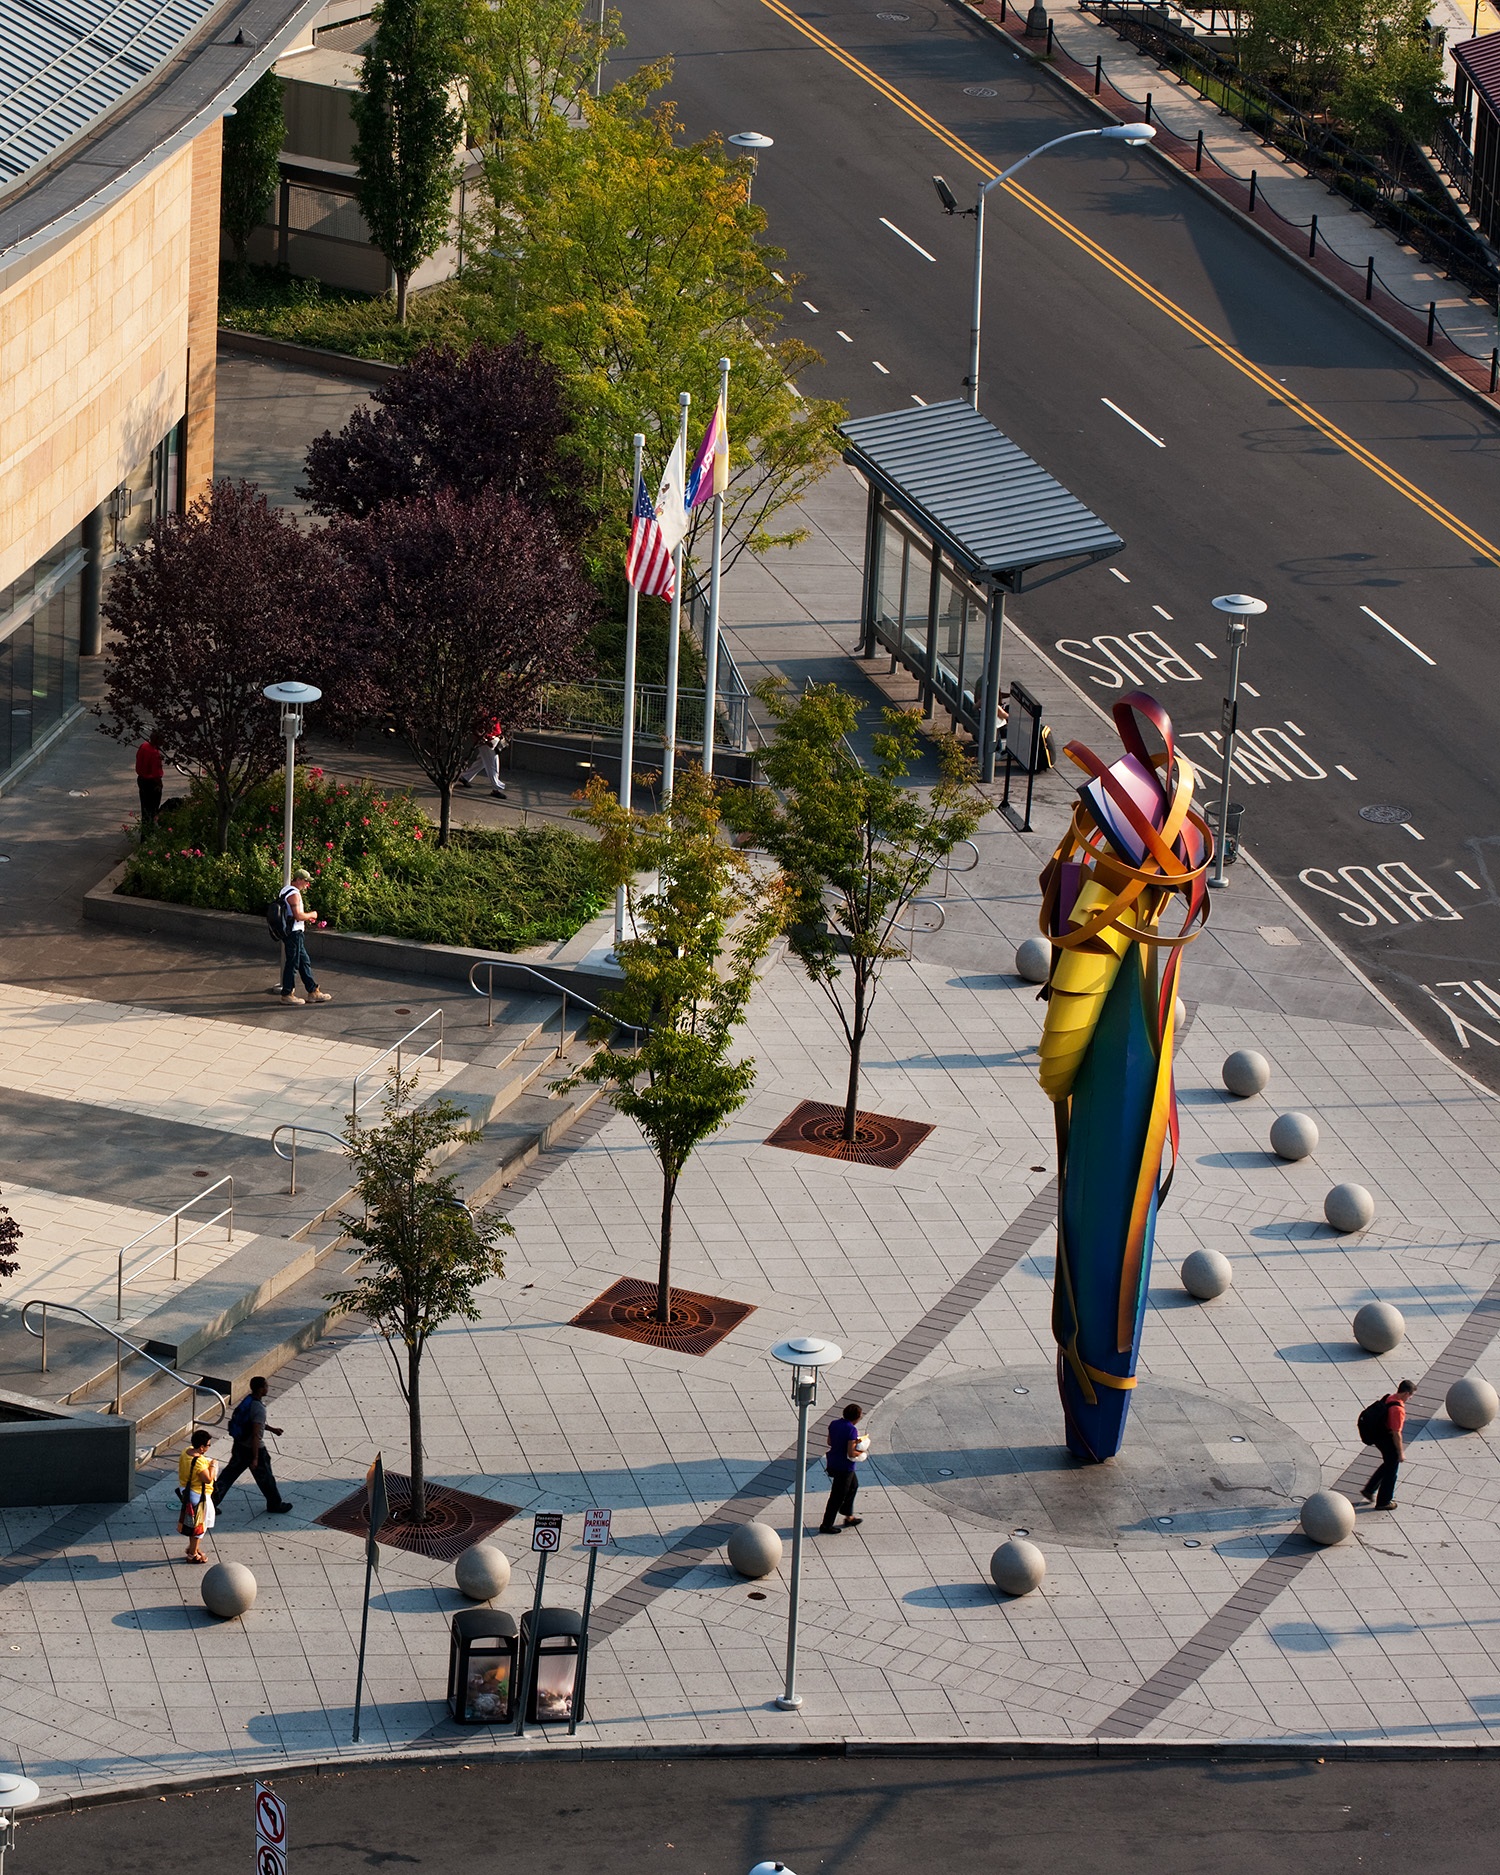 Trenton Transit Center plaza and public art